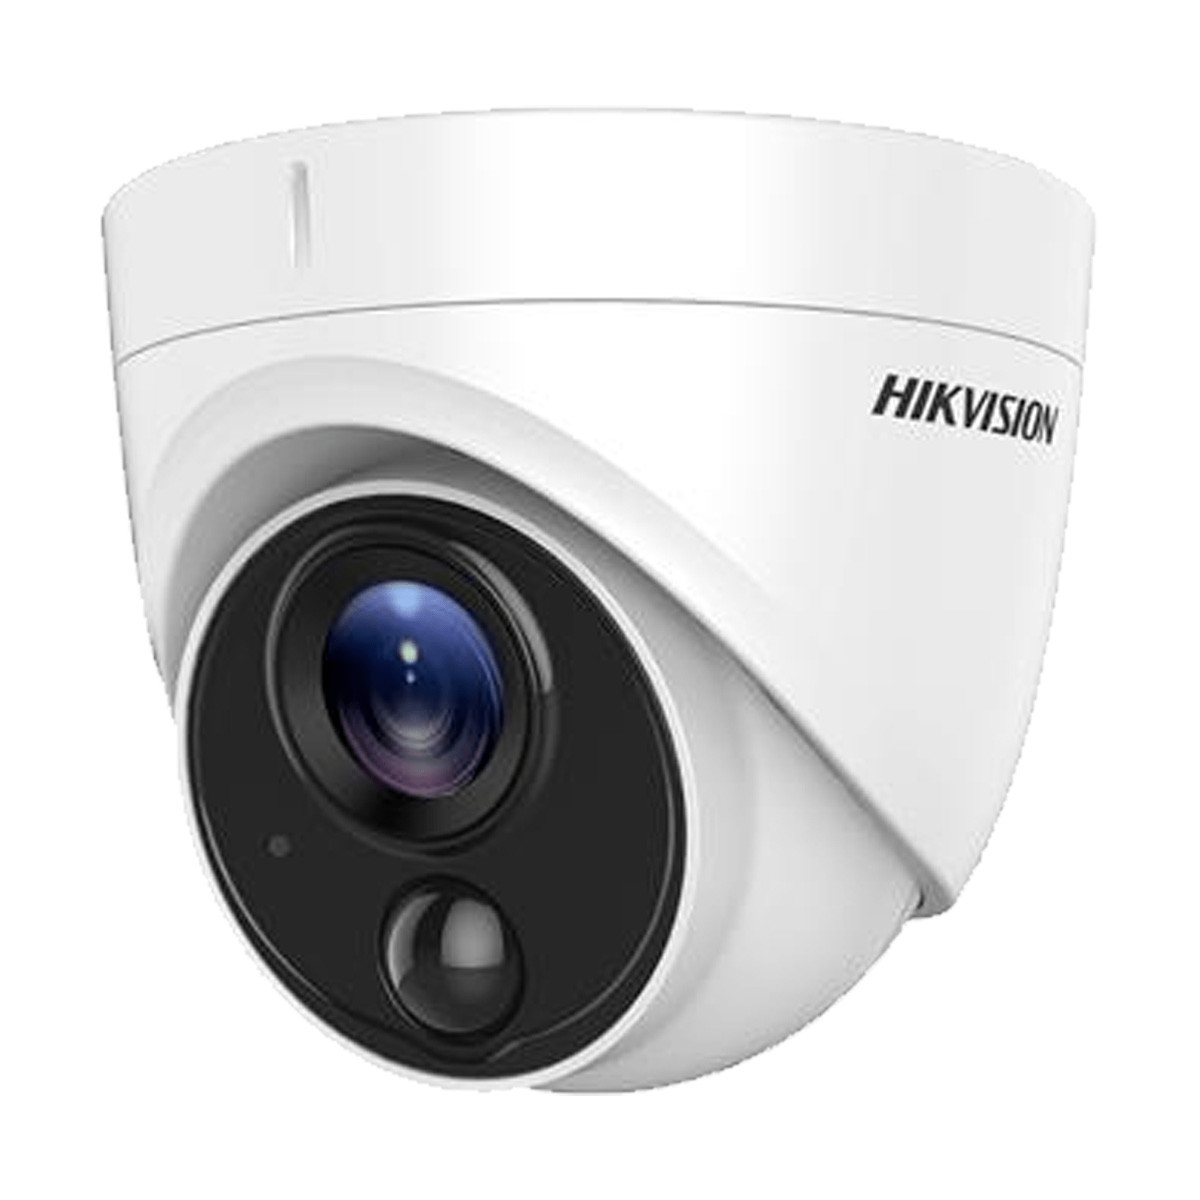 Câmera Hikvision dome DS-2CE71D0T-PIRL Full Hd 1080p, 20mts, infra vermelho, Exlr, Smart IR, ICR, 0.01 lux Ultra Low Light